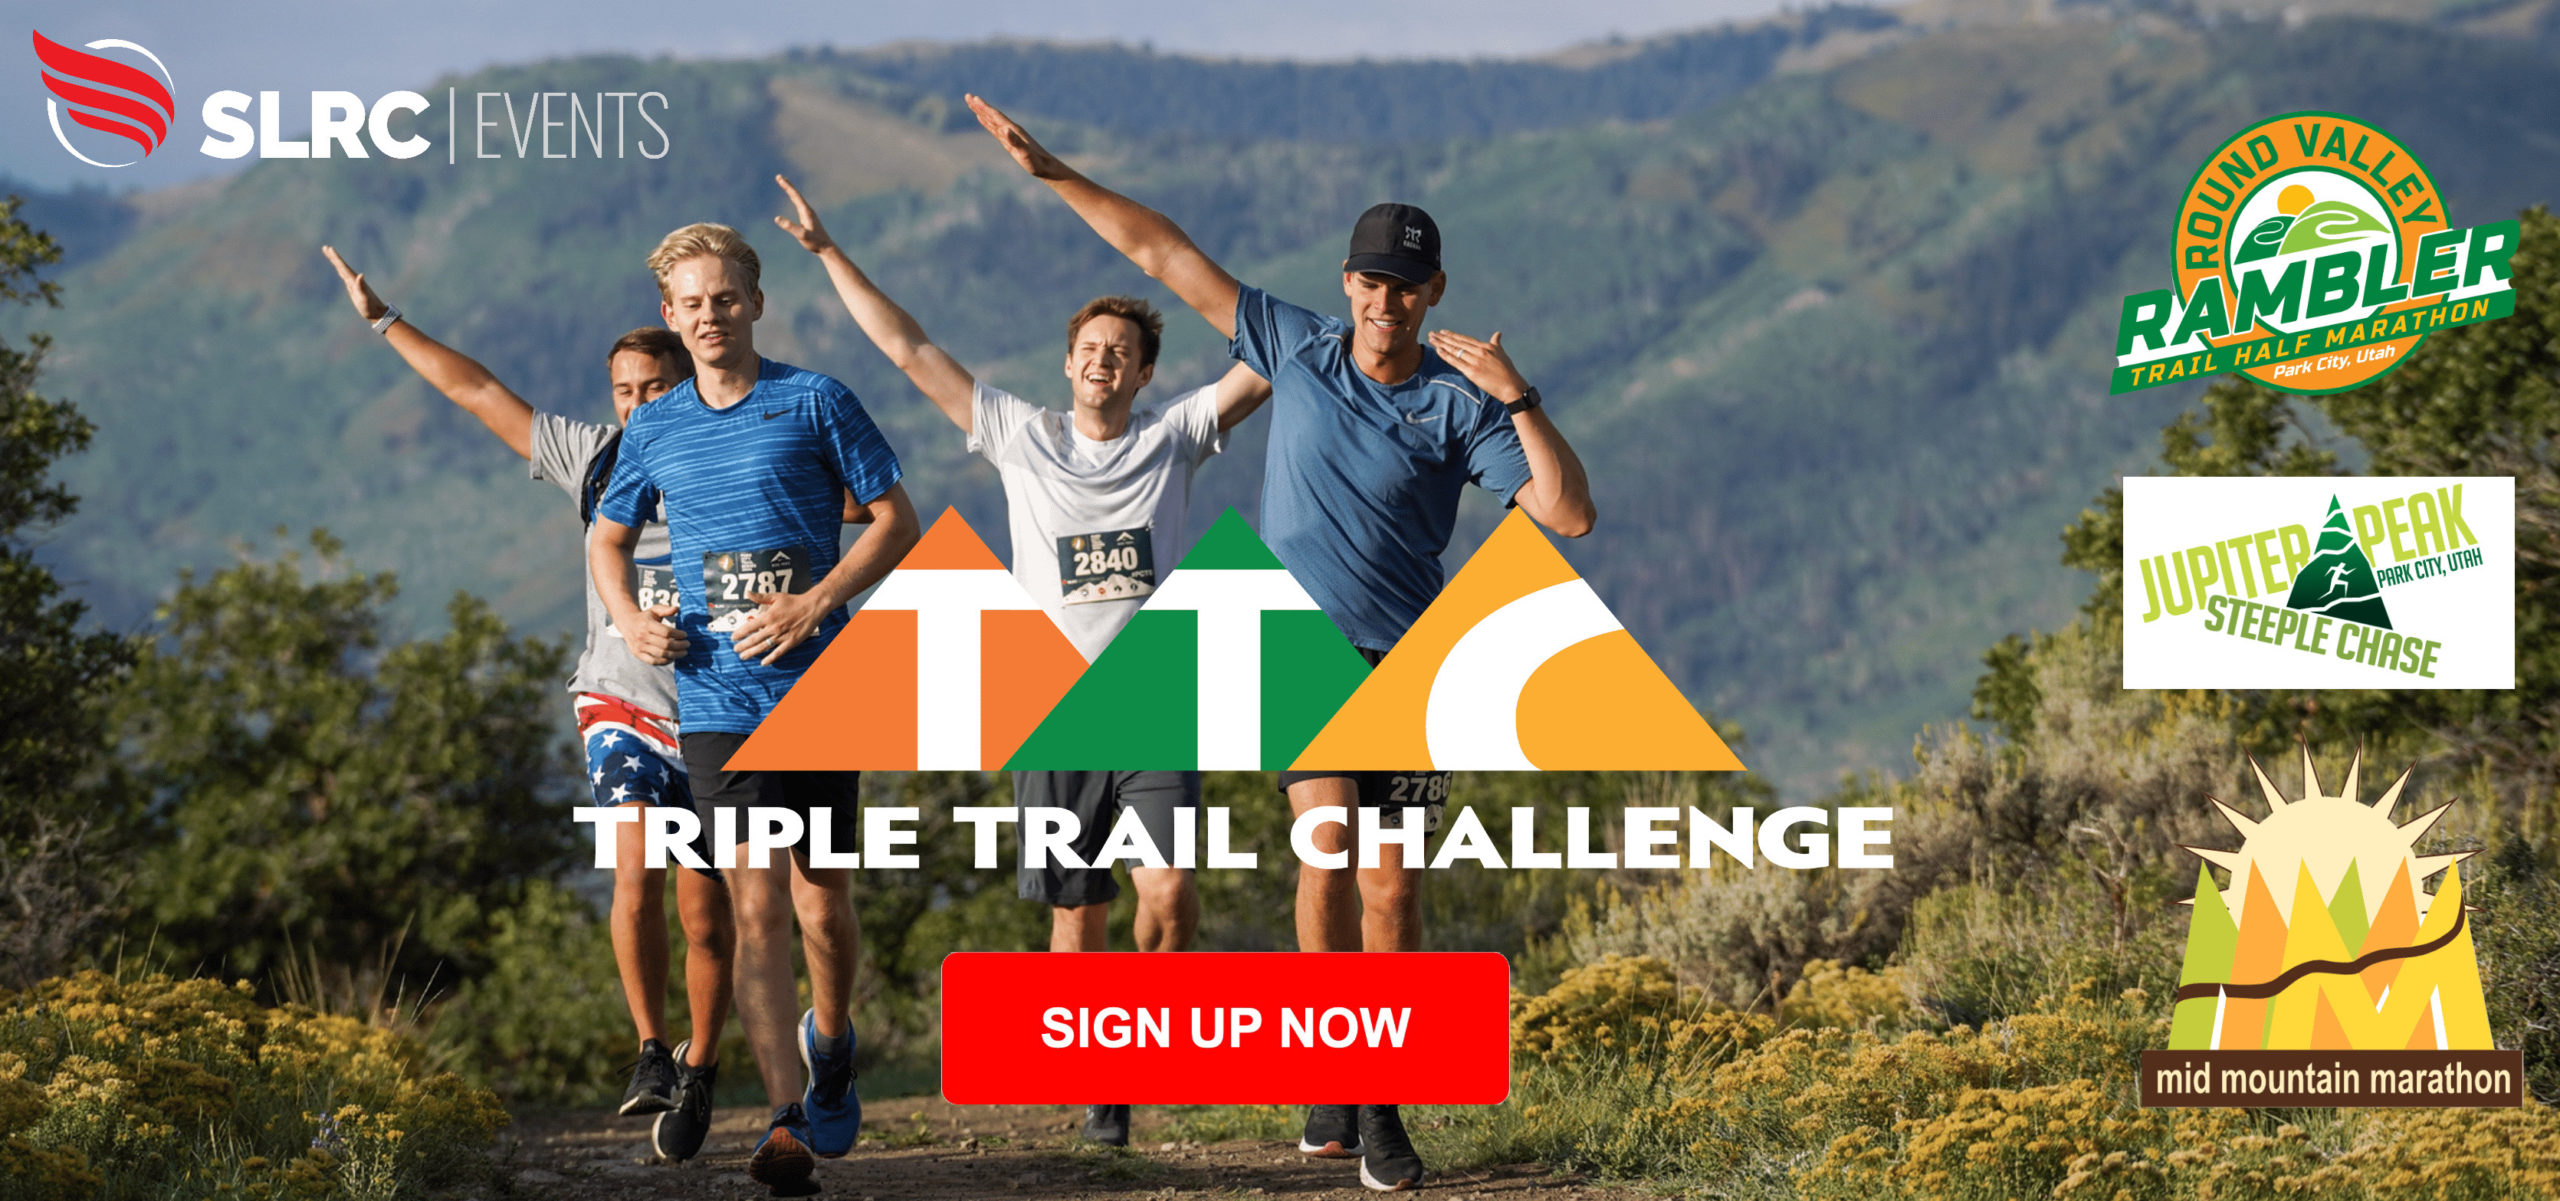 Triple Trail Challenge – The ultimate summer challenge! Complete all three TTC events – Round Valley Rambler Half Marathon, Jupiter Peak Steeplechase & Mid Mountain Marathon and earn mountain bragging rights.